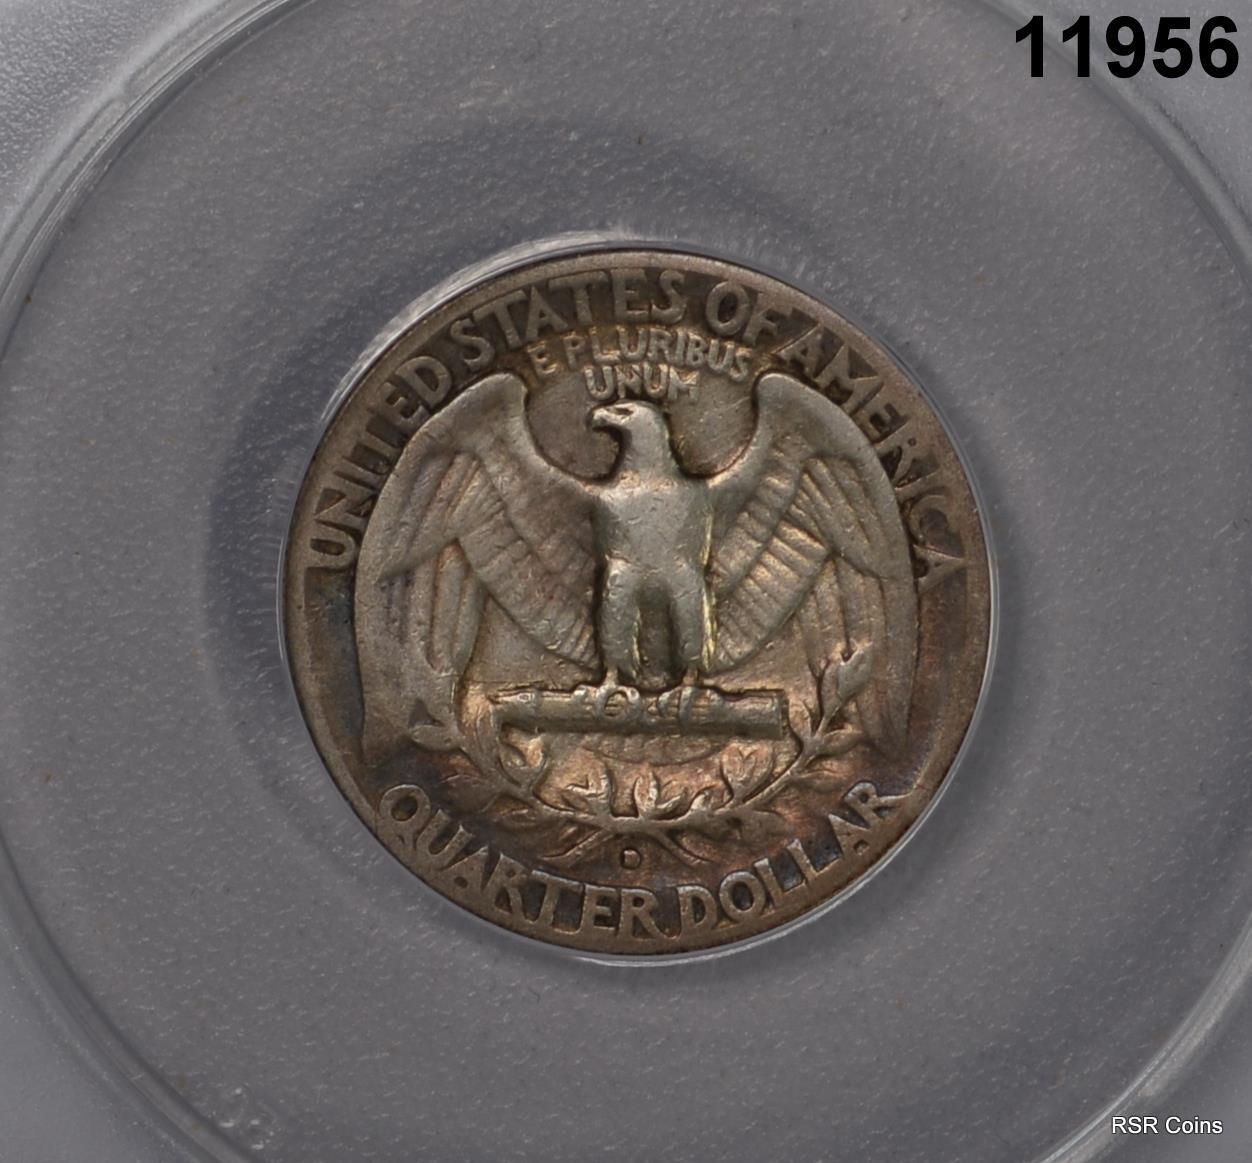 1932 D WASHINGTON QUARTER KEY DATE ANACS CERTIFIED VG 8 #11956